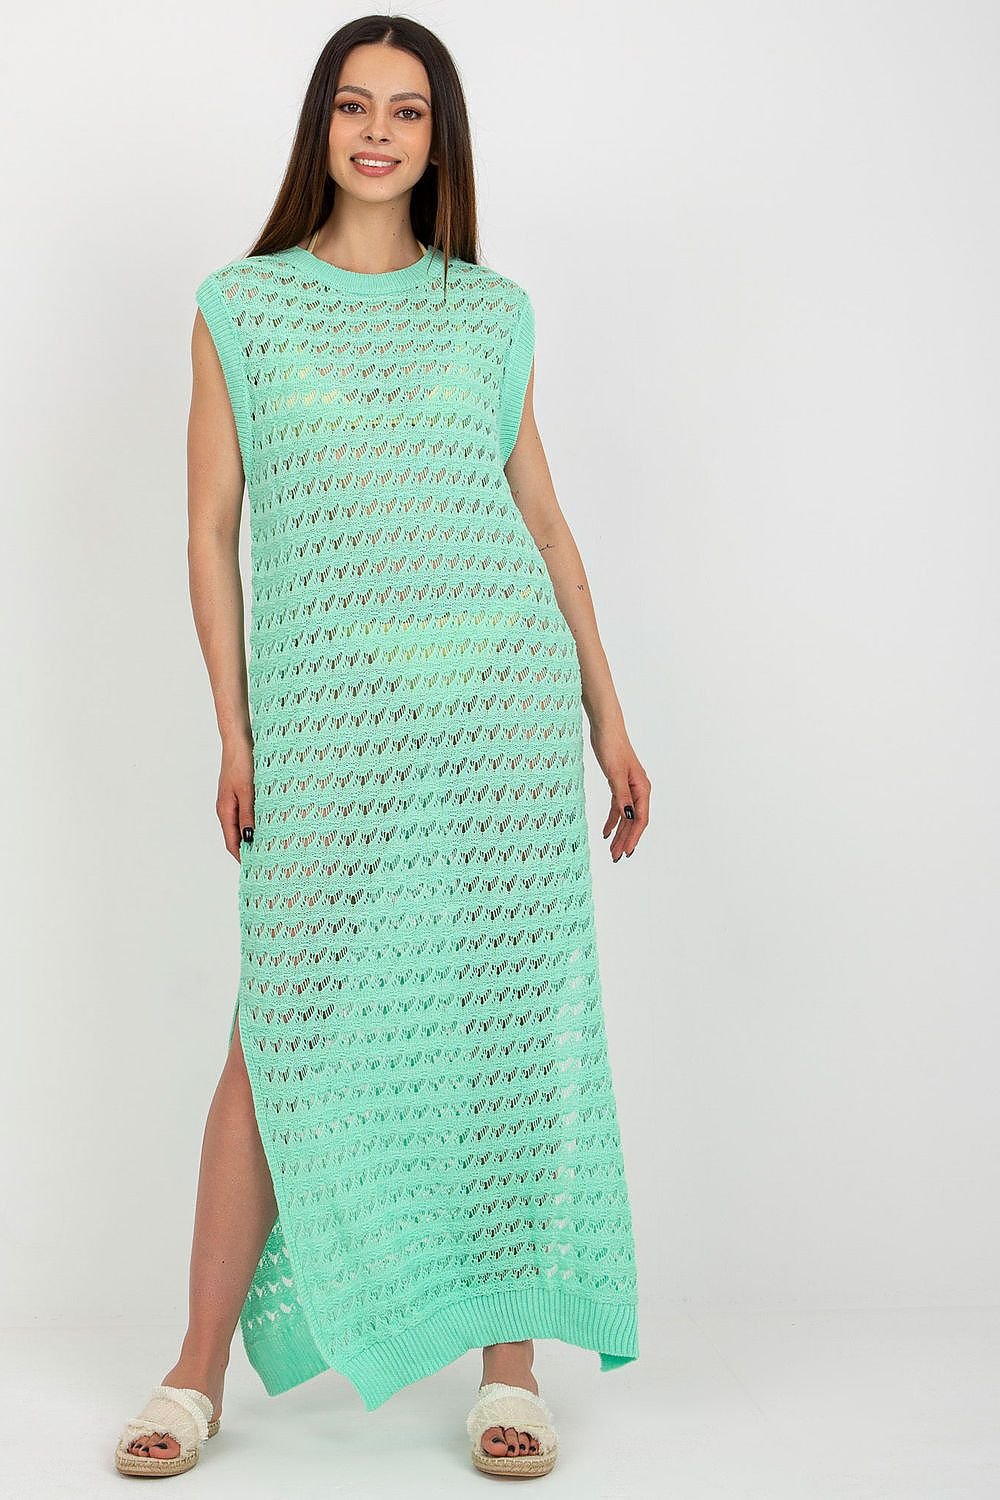 TEEK - Sleeveless Mesh Side Slits Beach Dress DRESS TEEK MH green One Size 